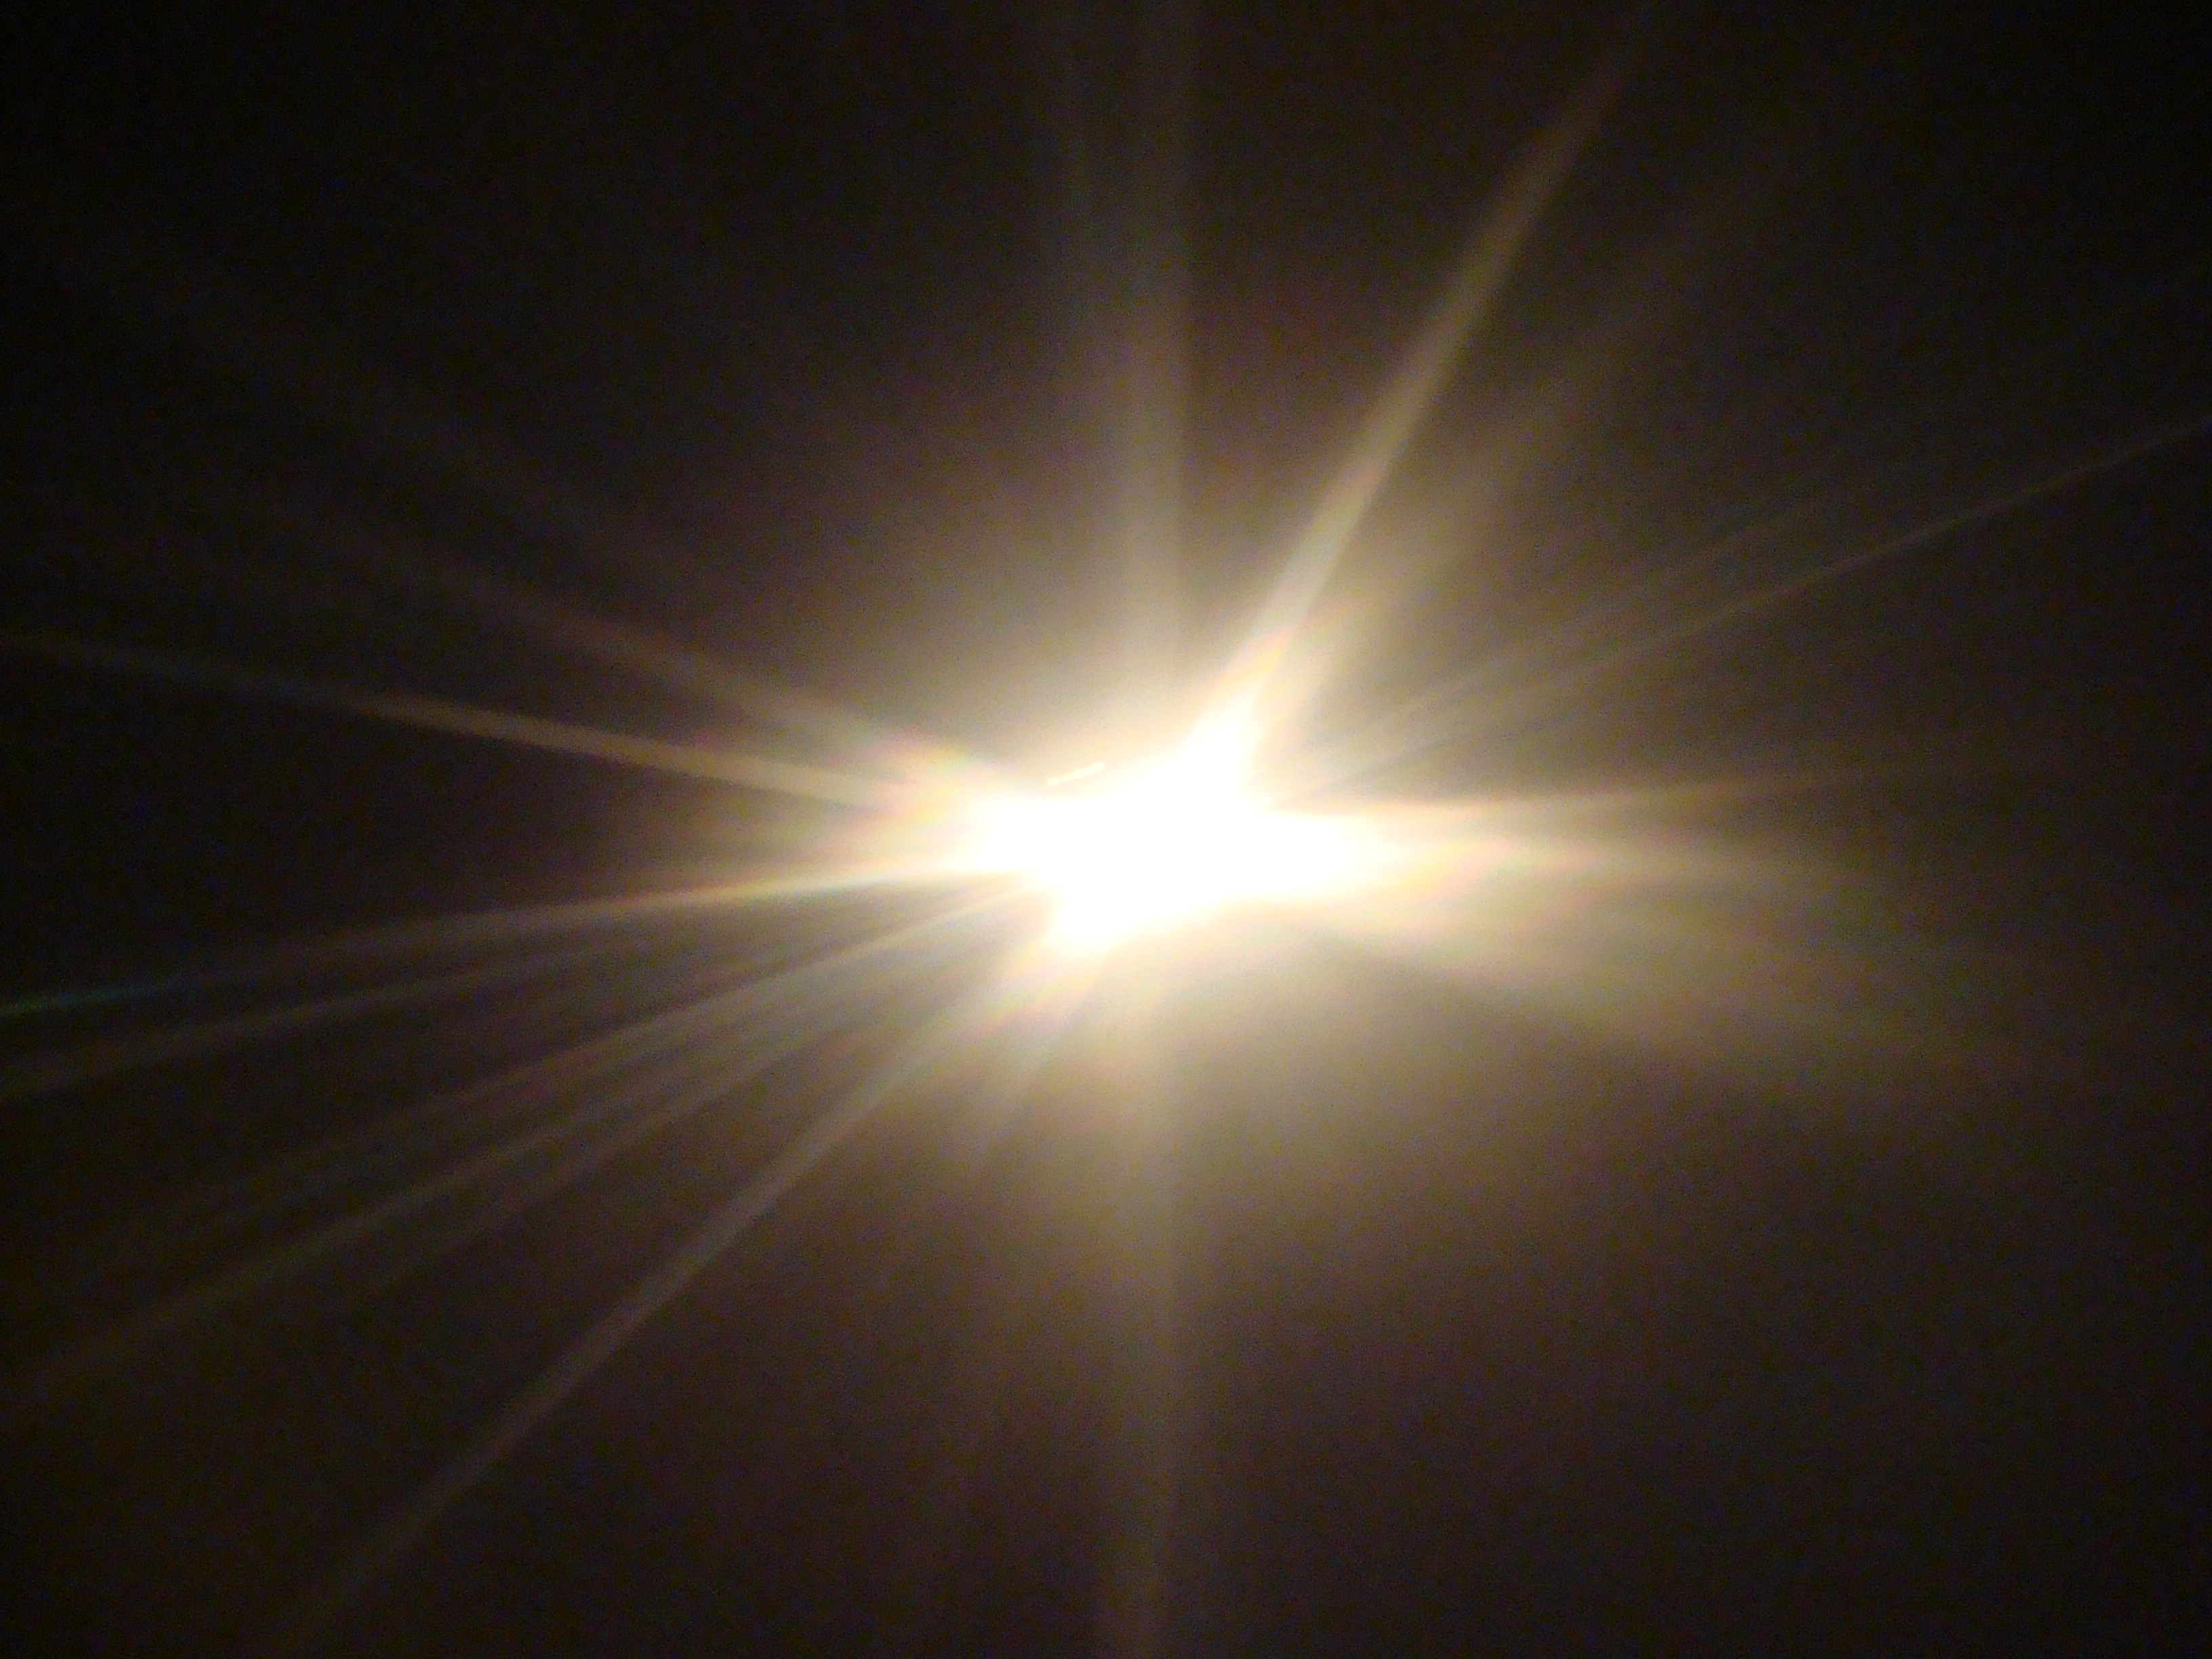 File:Light shining1.JPG - Wikimedia Commons